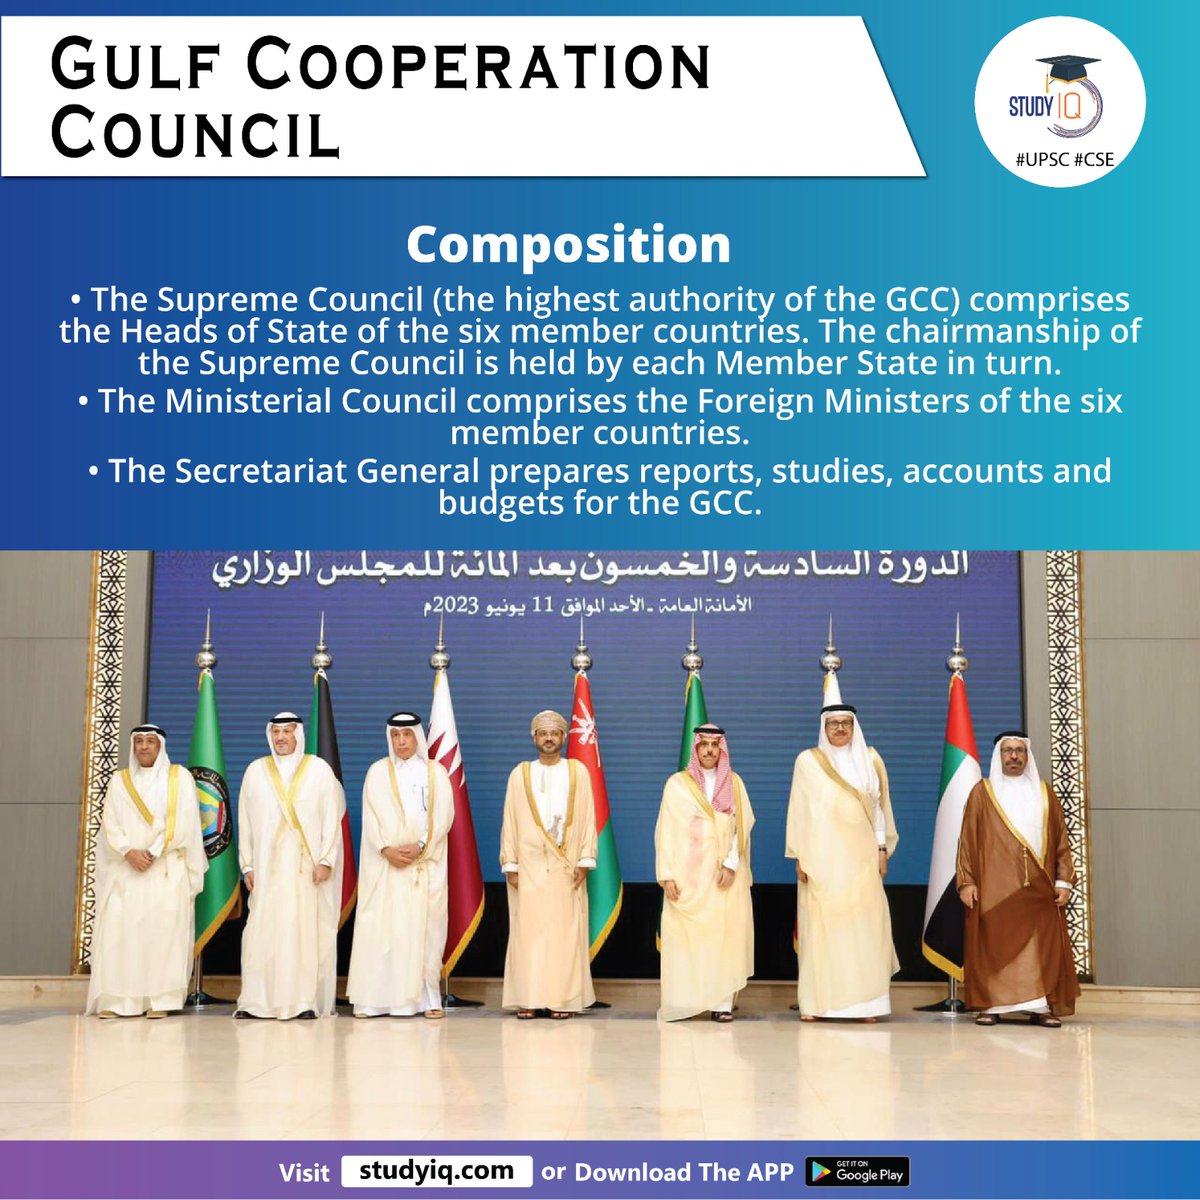 Gulf Cooperation Council

#gulfcooperationcouncil #gcc #tradeagreement #india #whyinnews #middleeast #saudiarabia #kuwait #unitedarabemirates #qatar #bahrain #oman #riyadh #privatesector #agriculture #water #foreignministers #upsc #cse #ips #ias #worldaffairs